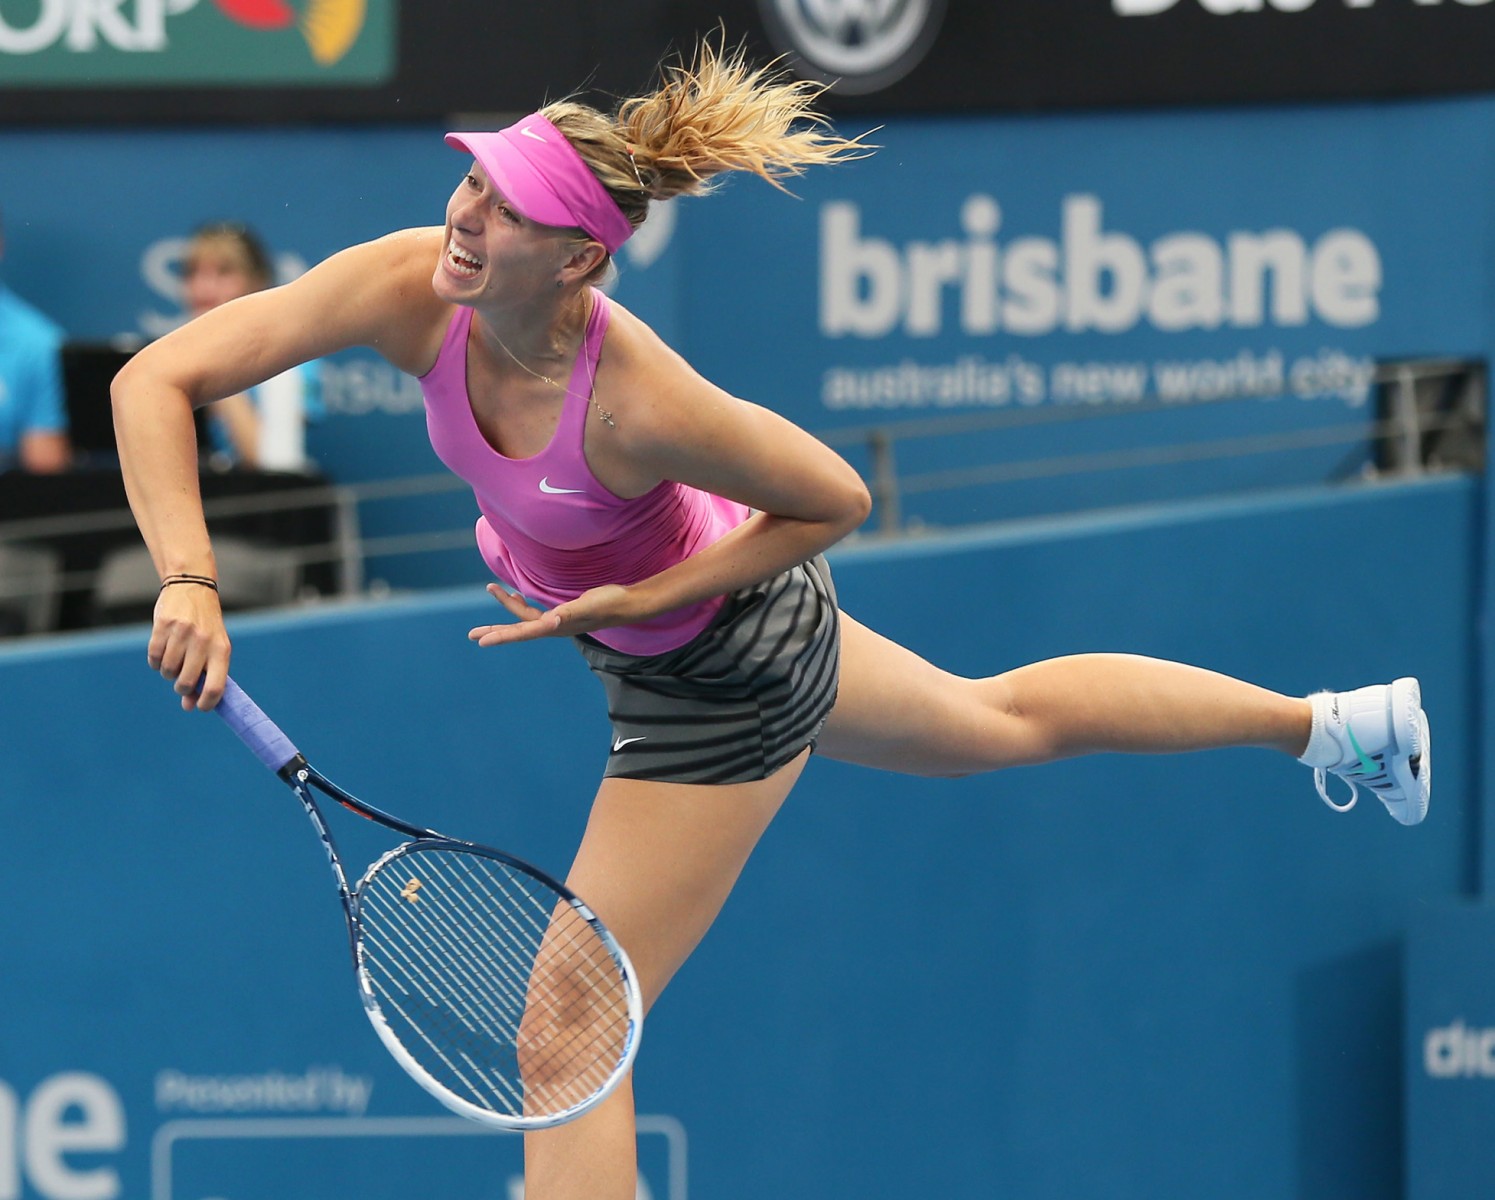 Day 3 preview: Hewitt, Sharapova begin quest - Brisbane International Tennis1495 x 1200